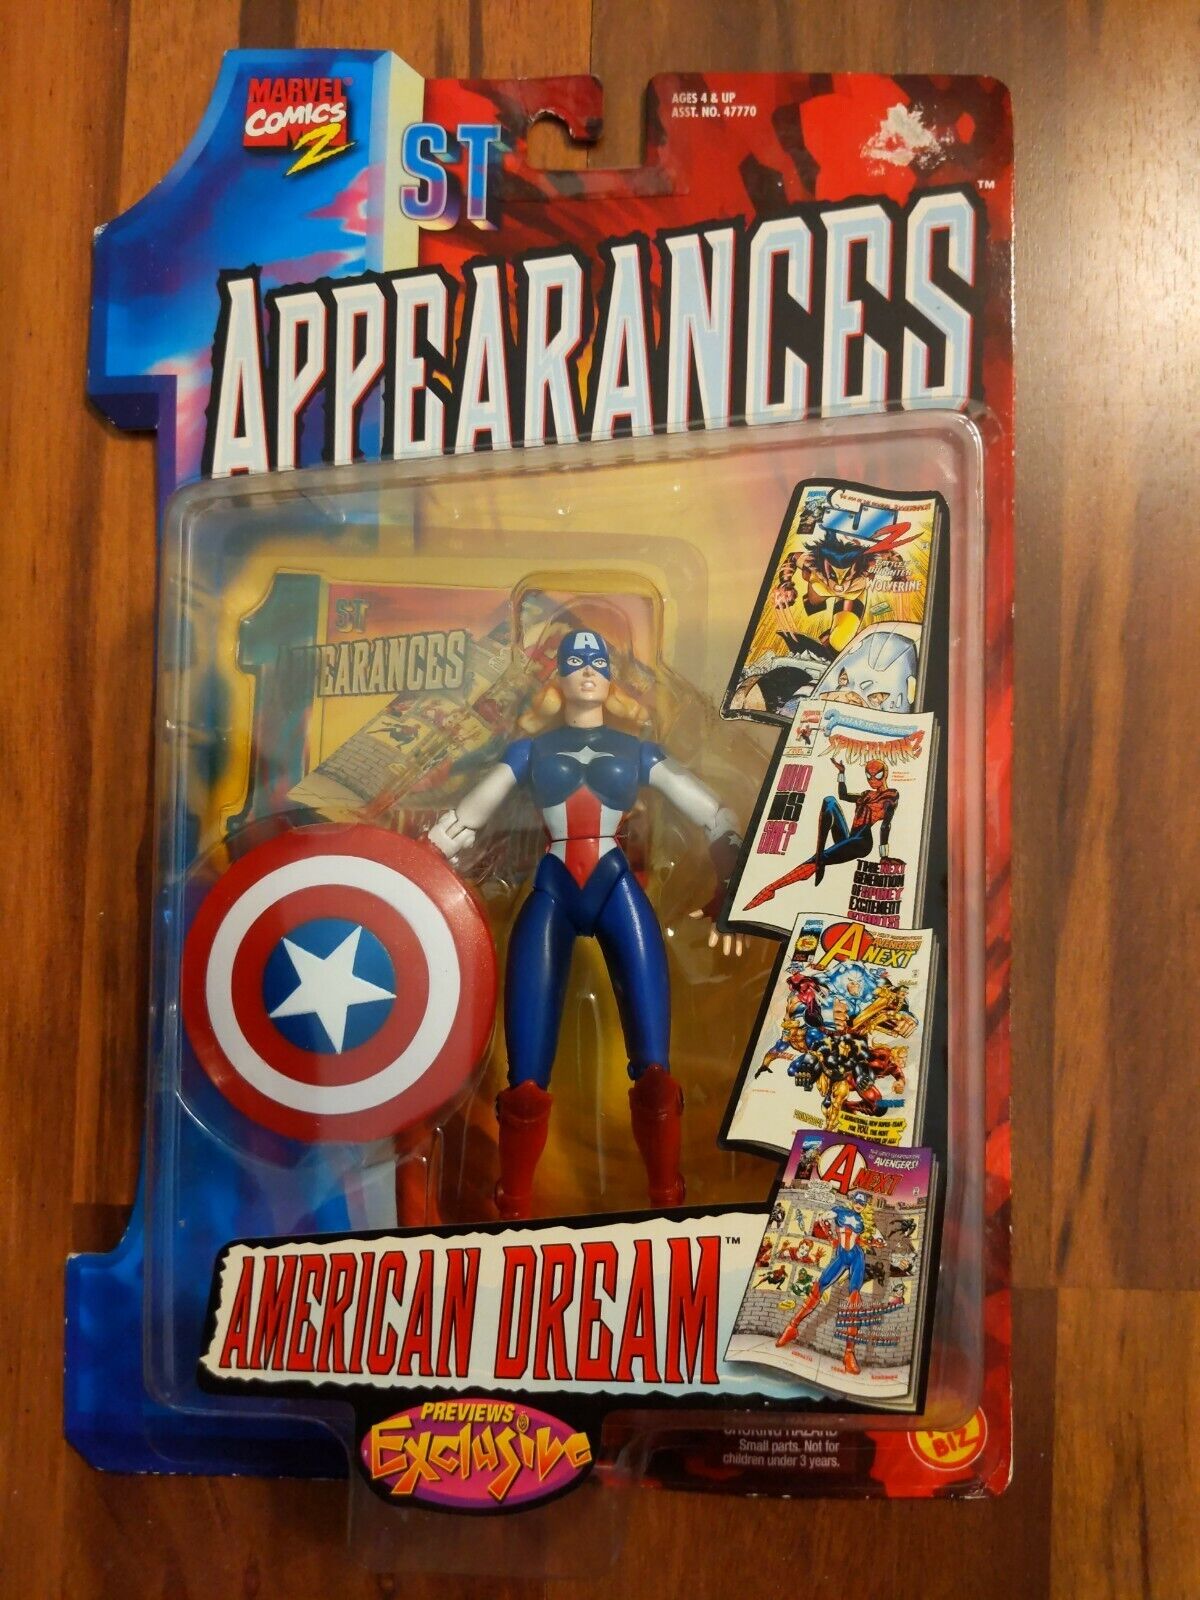  American Dream- Marvel Comics2 -1st Appearances 5 inch Action Figure 1999 BNIB